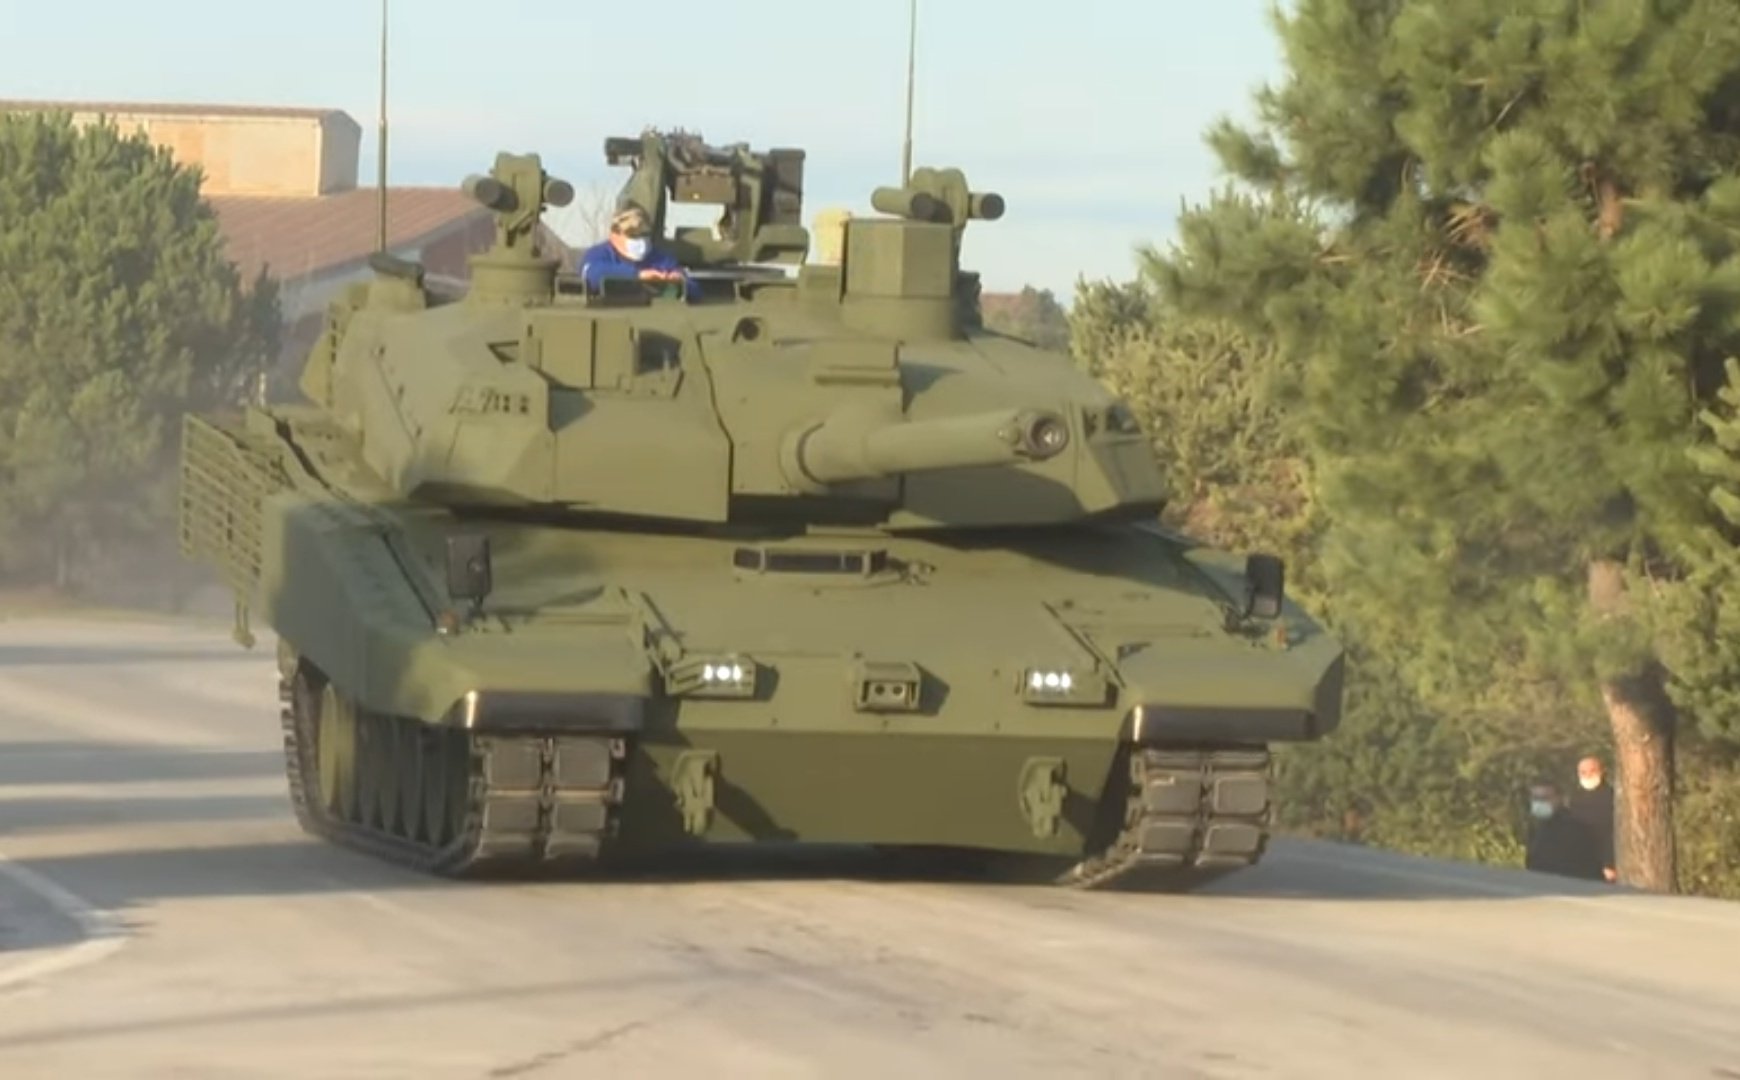 Türkiye's renewed main battle tank Altay ready for army tests